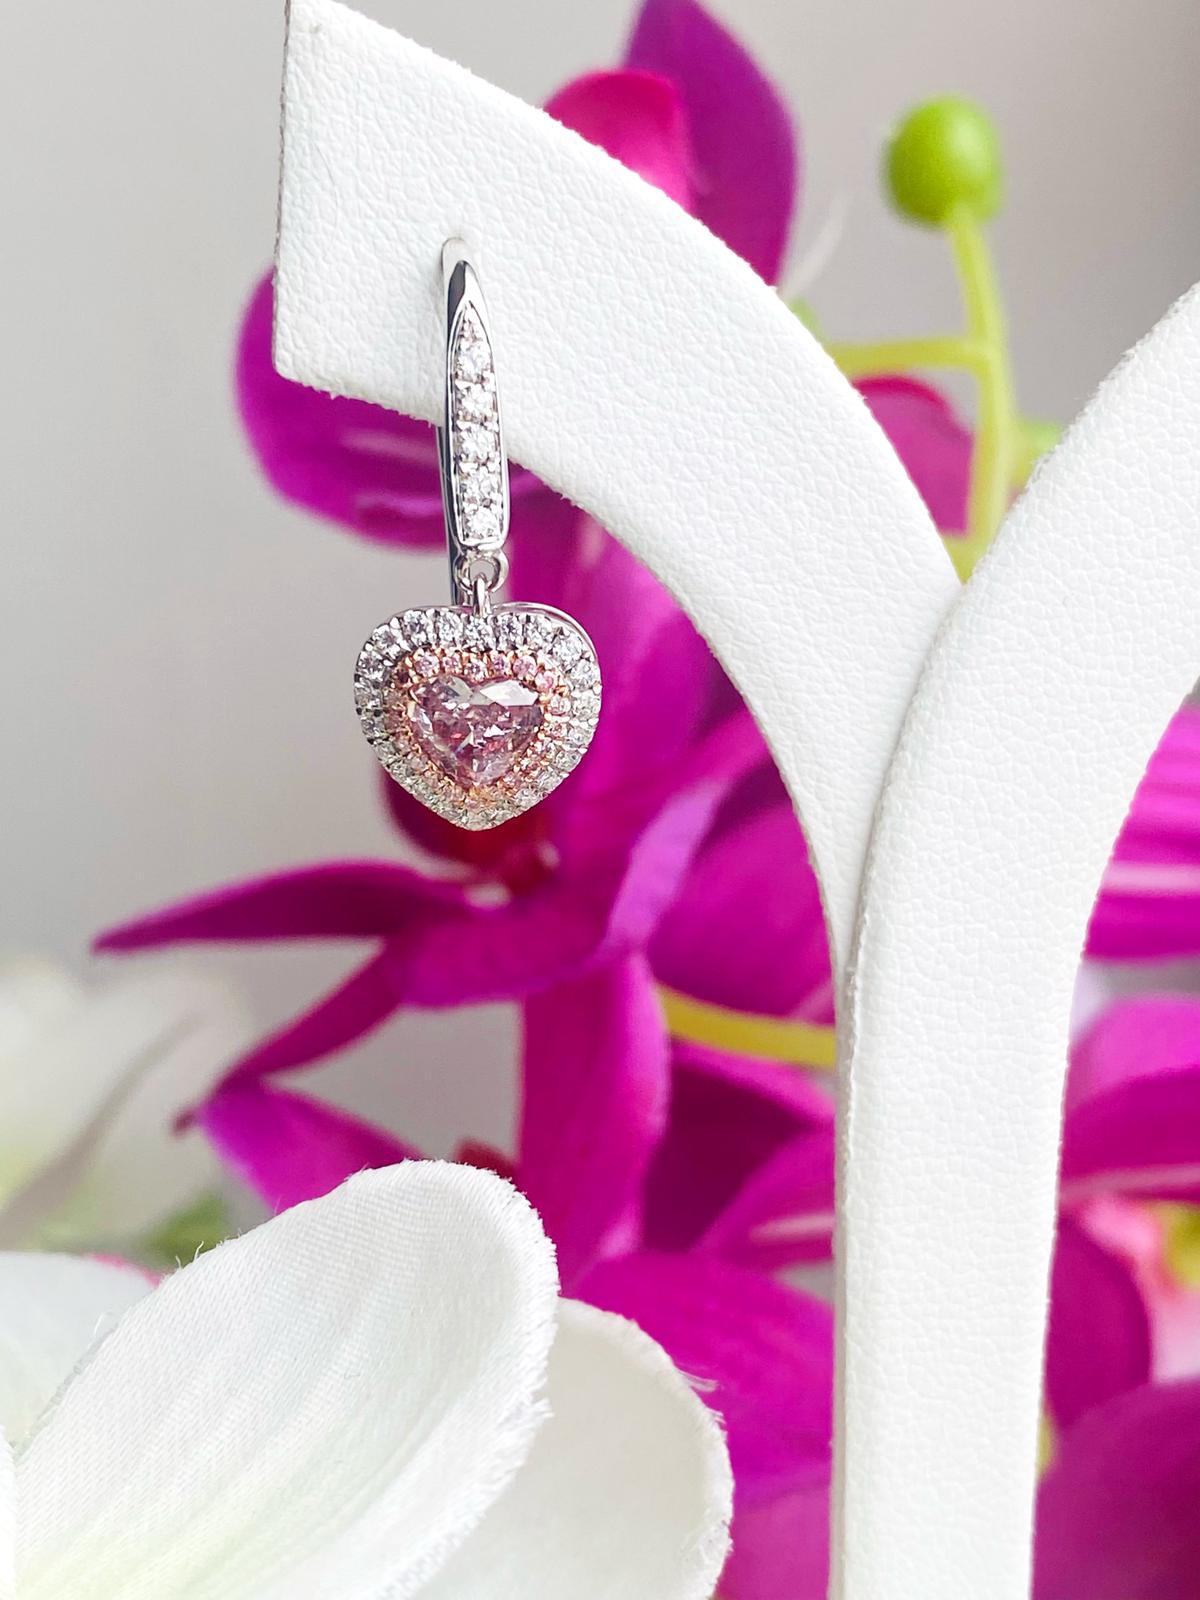 Heart Cut 0.85 carat Pink diamond earrings GIA certified I1 clarity For Sale